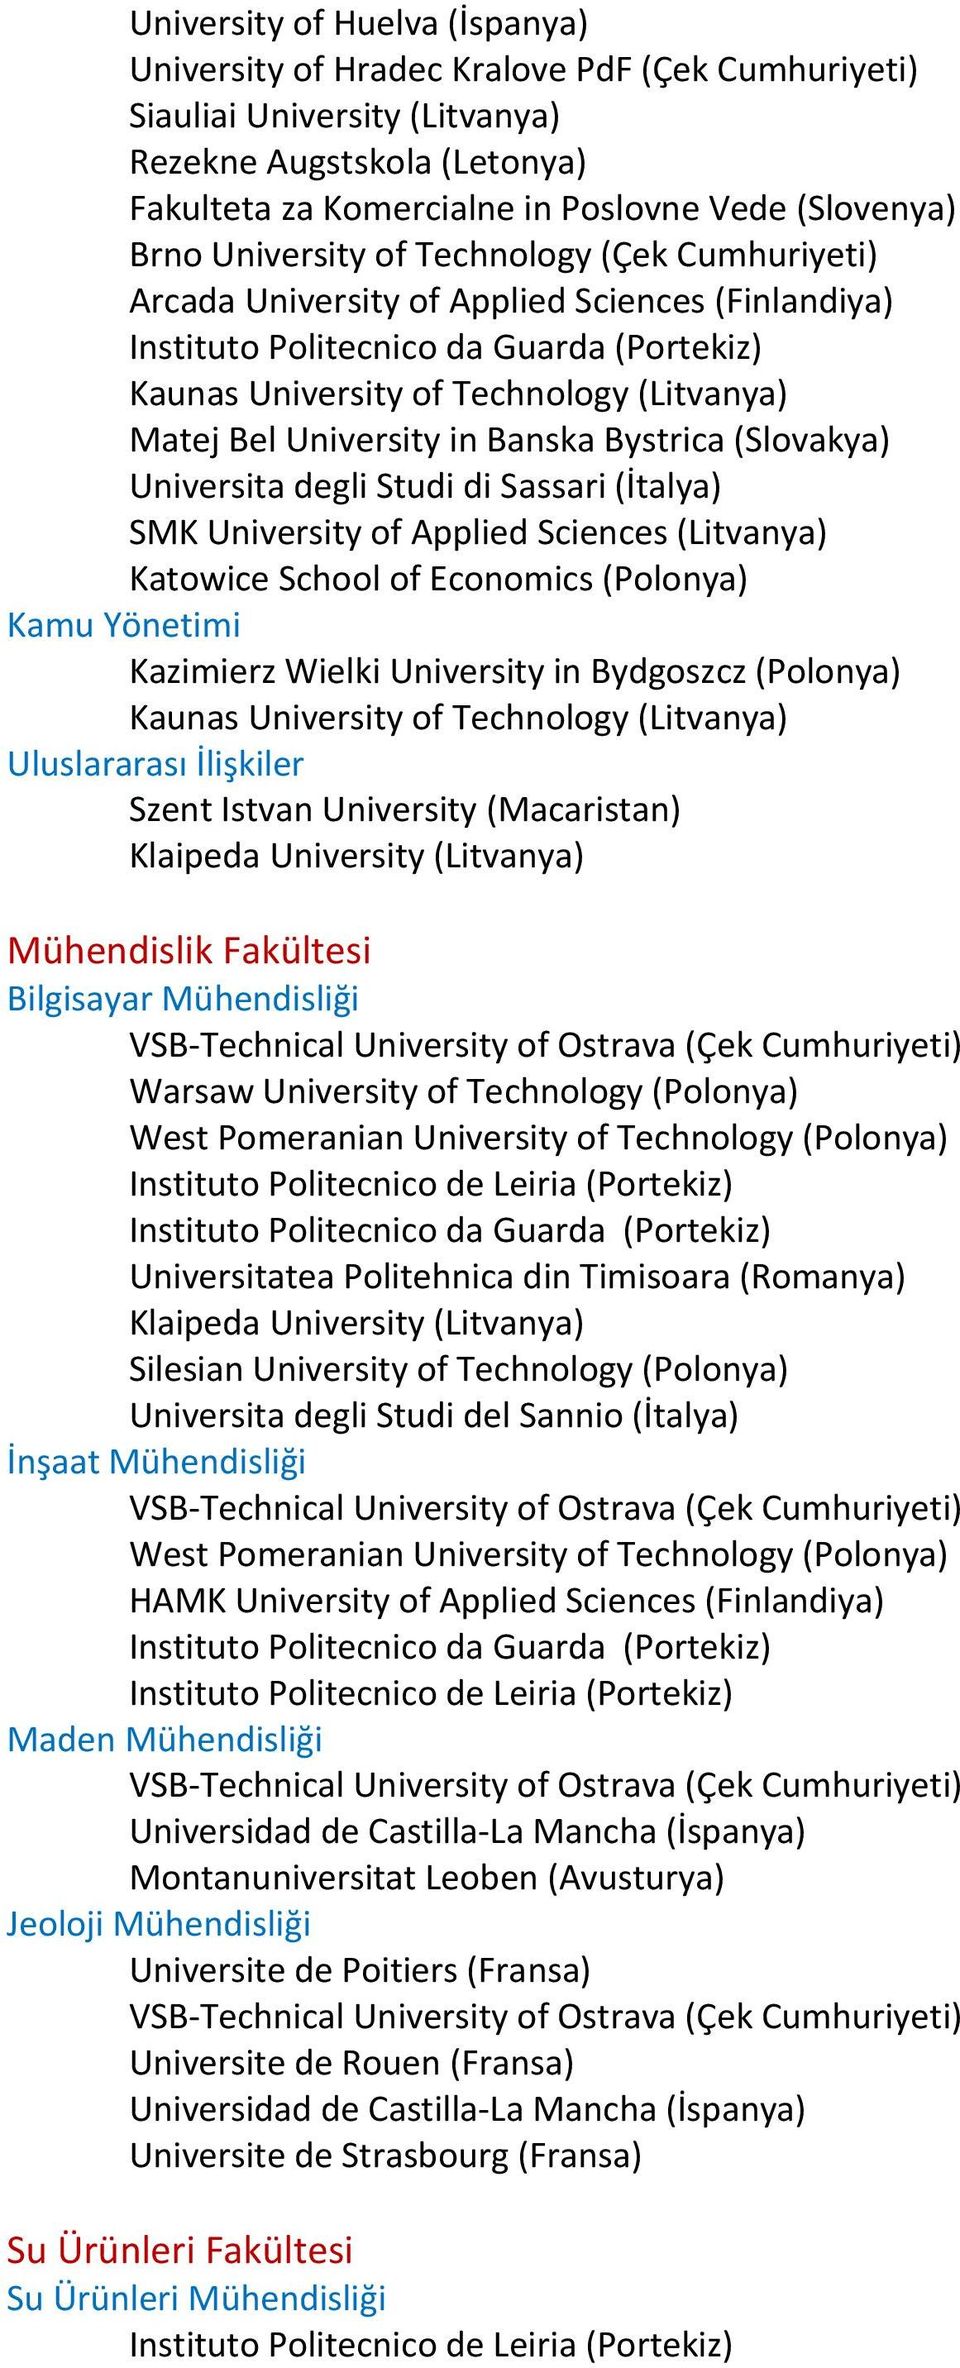 Fakültesi Bilgisayar Mühendisliği Warsaw University of Technology (Polonya) West Pomeranian University of Technology (Polonya) Universitatea Politehnica din Timisoara (Romanya) Silesian University of